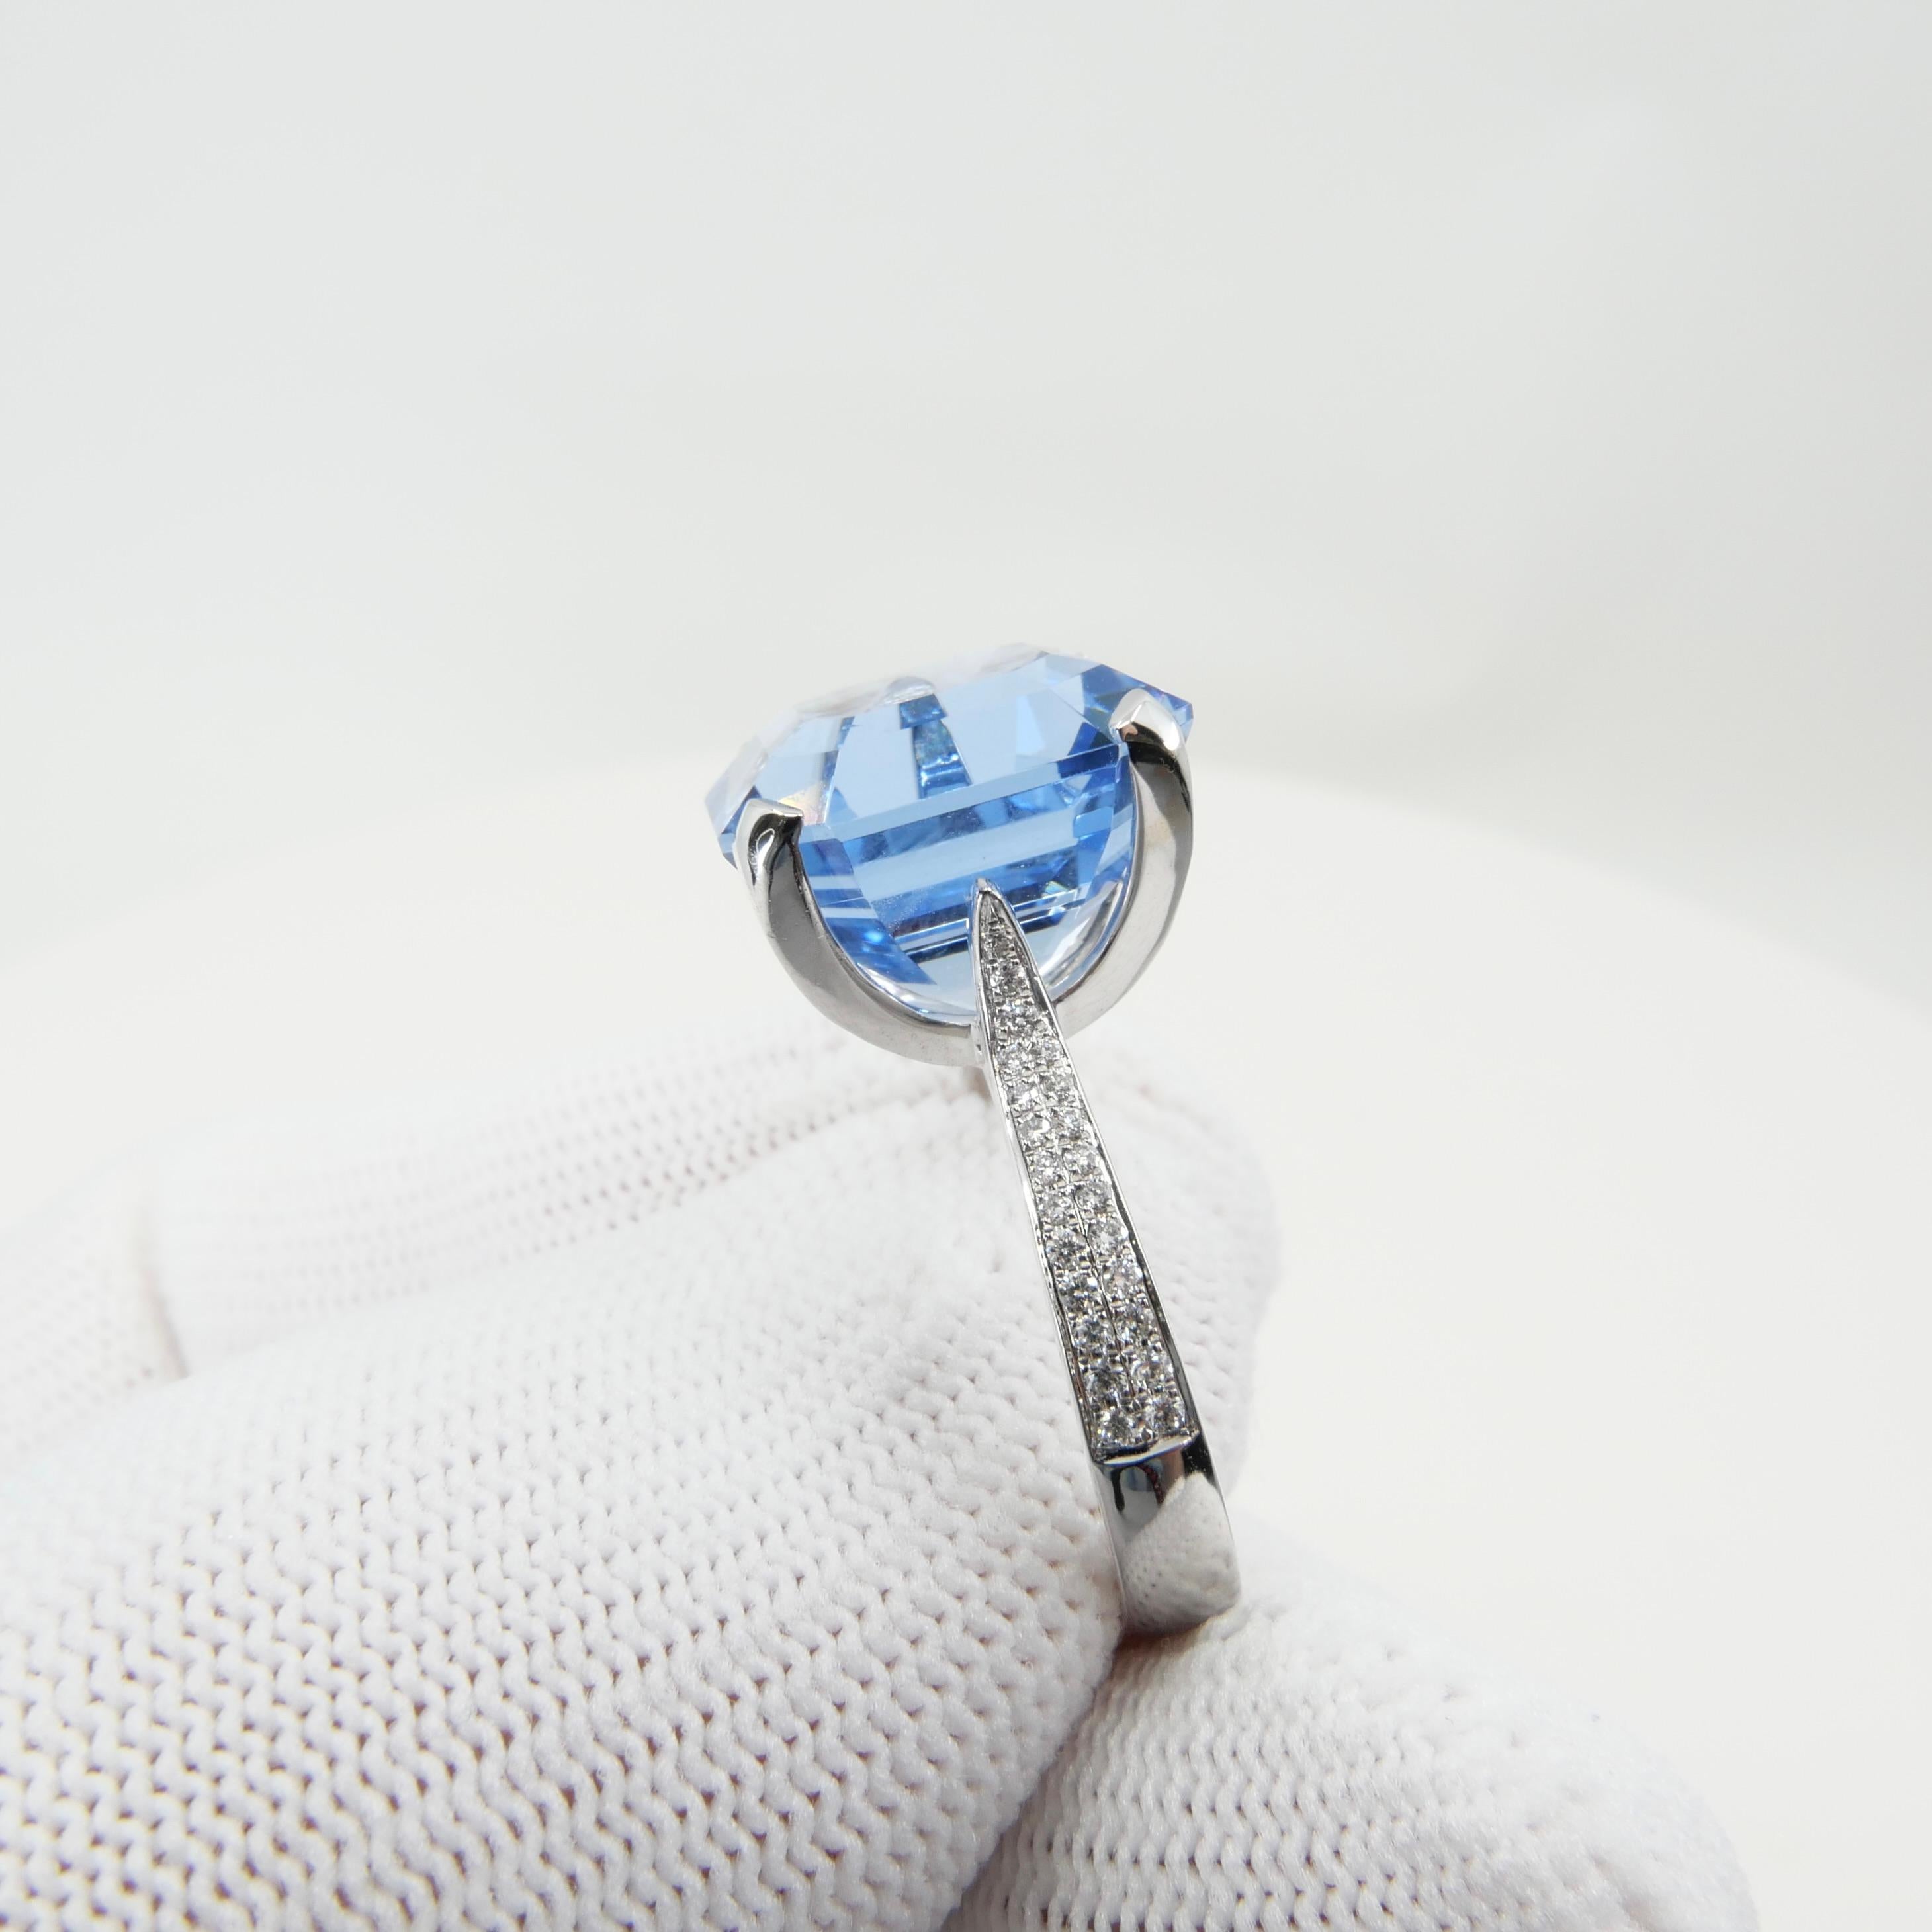 Certified 11.23 Cts Asscher Cut Aquamarine Diamond Ring, True Santa Maria Color 12